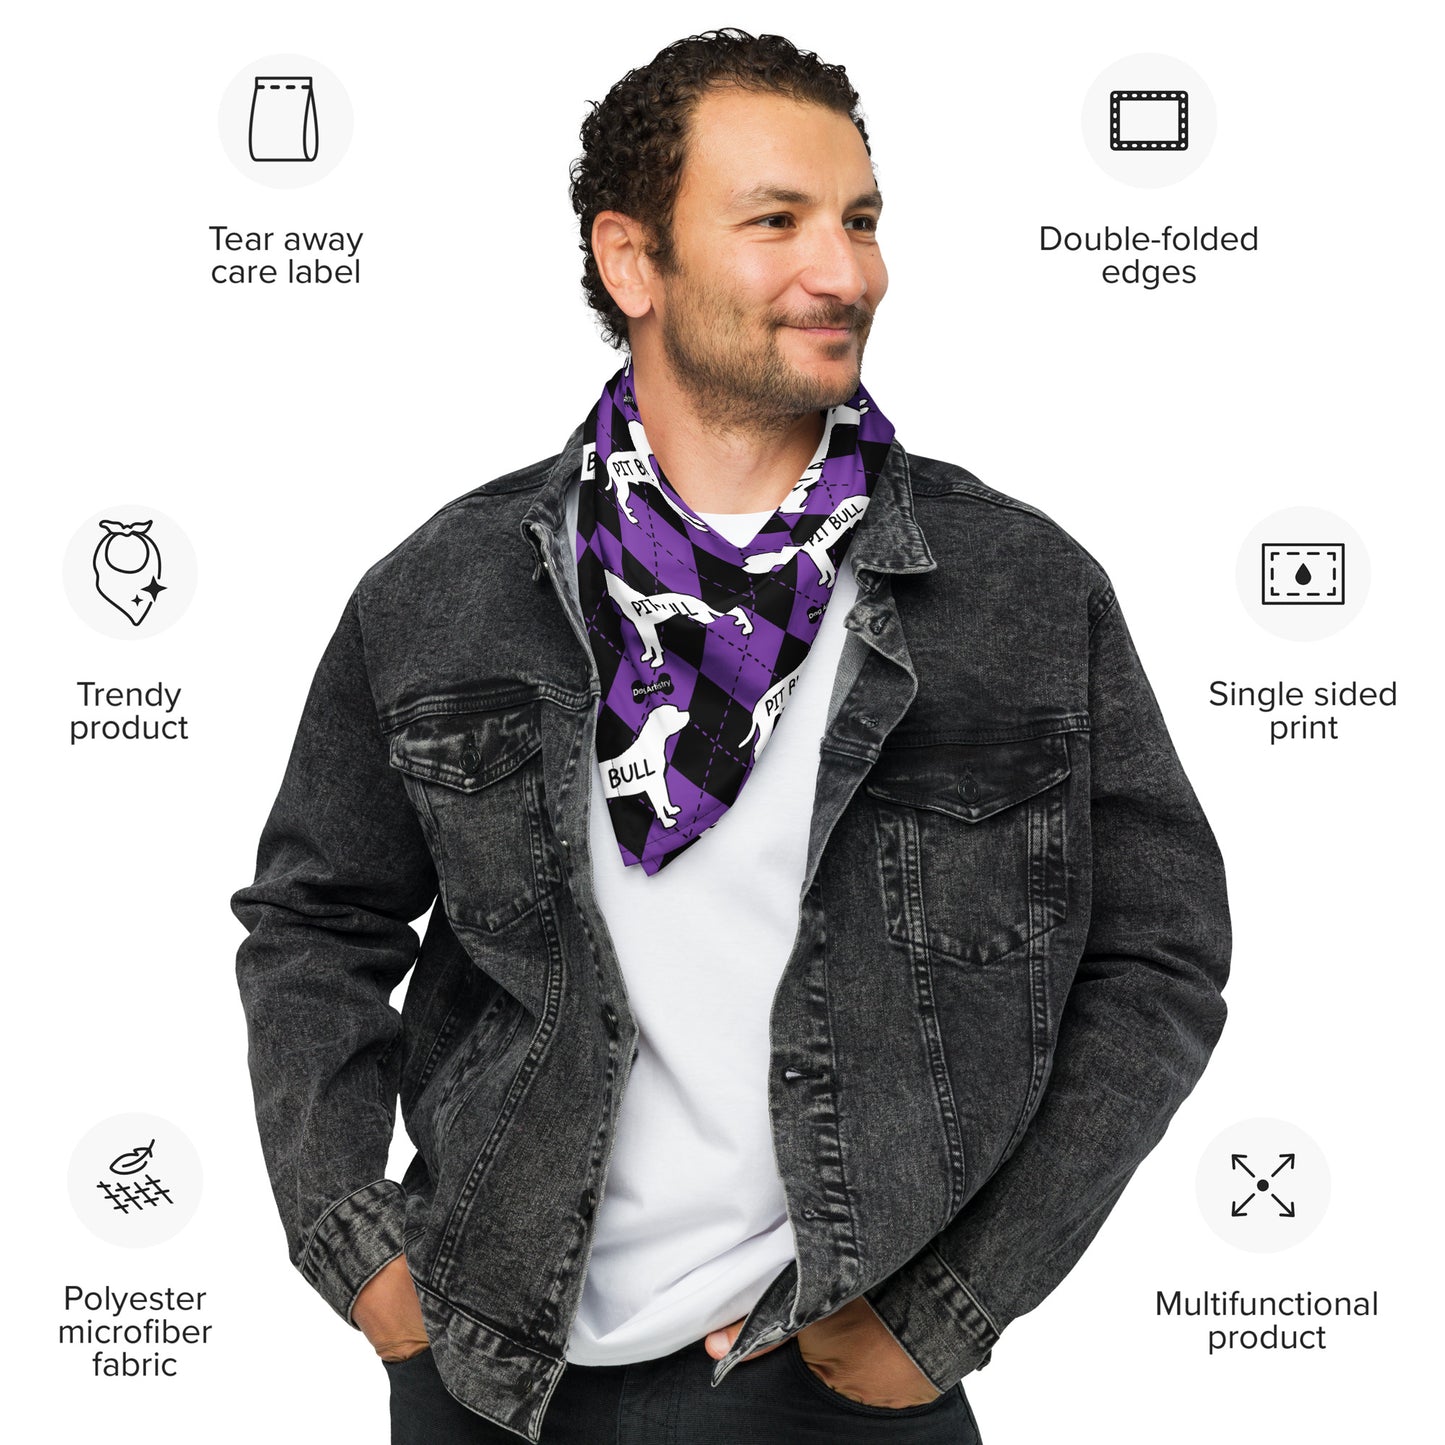 Pit Bull Argyle Purple and Black All-over print bandana